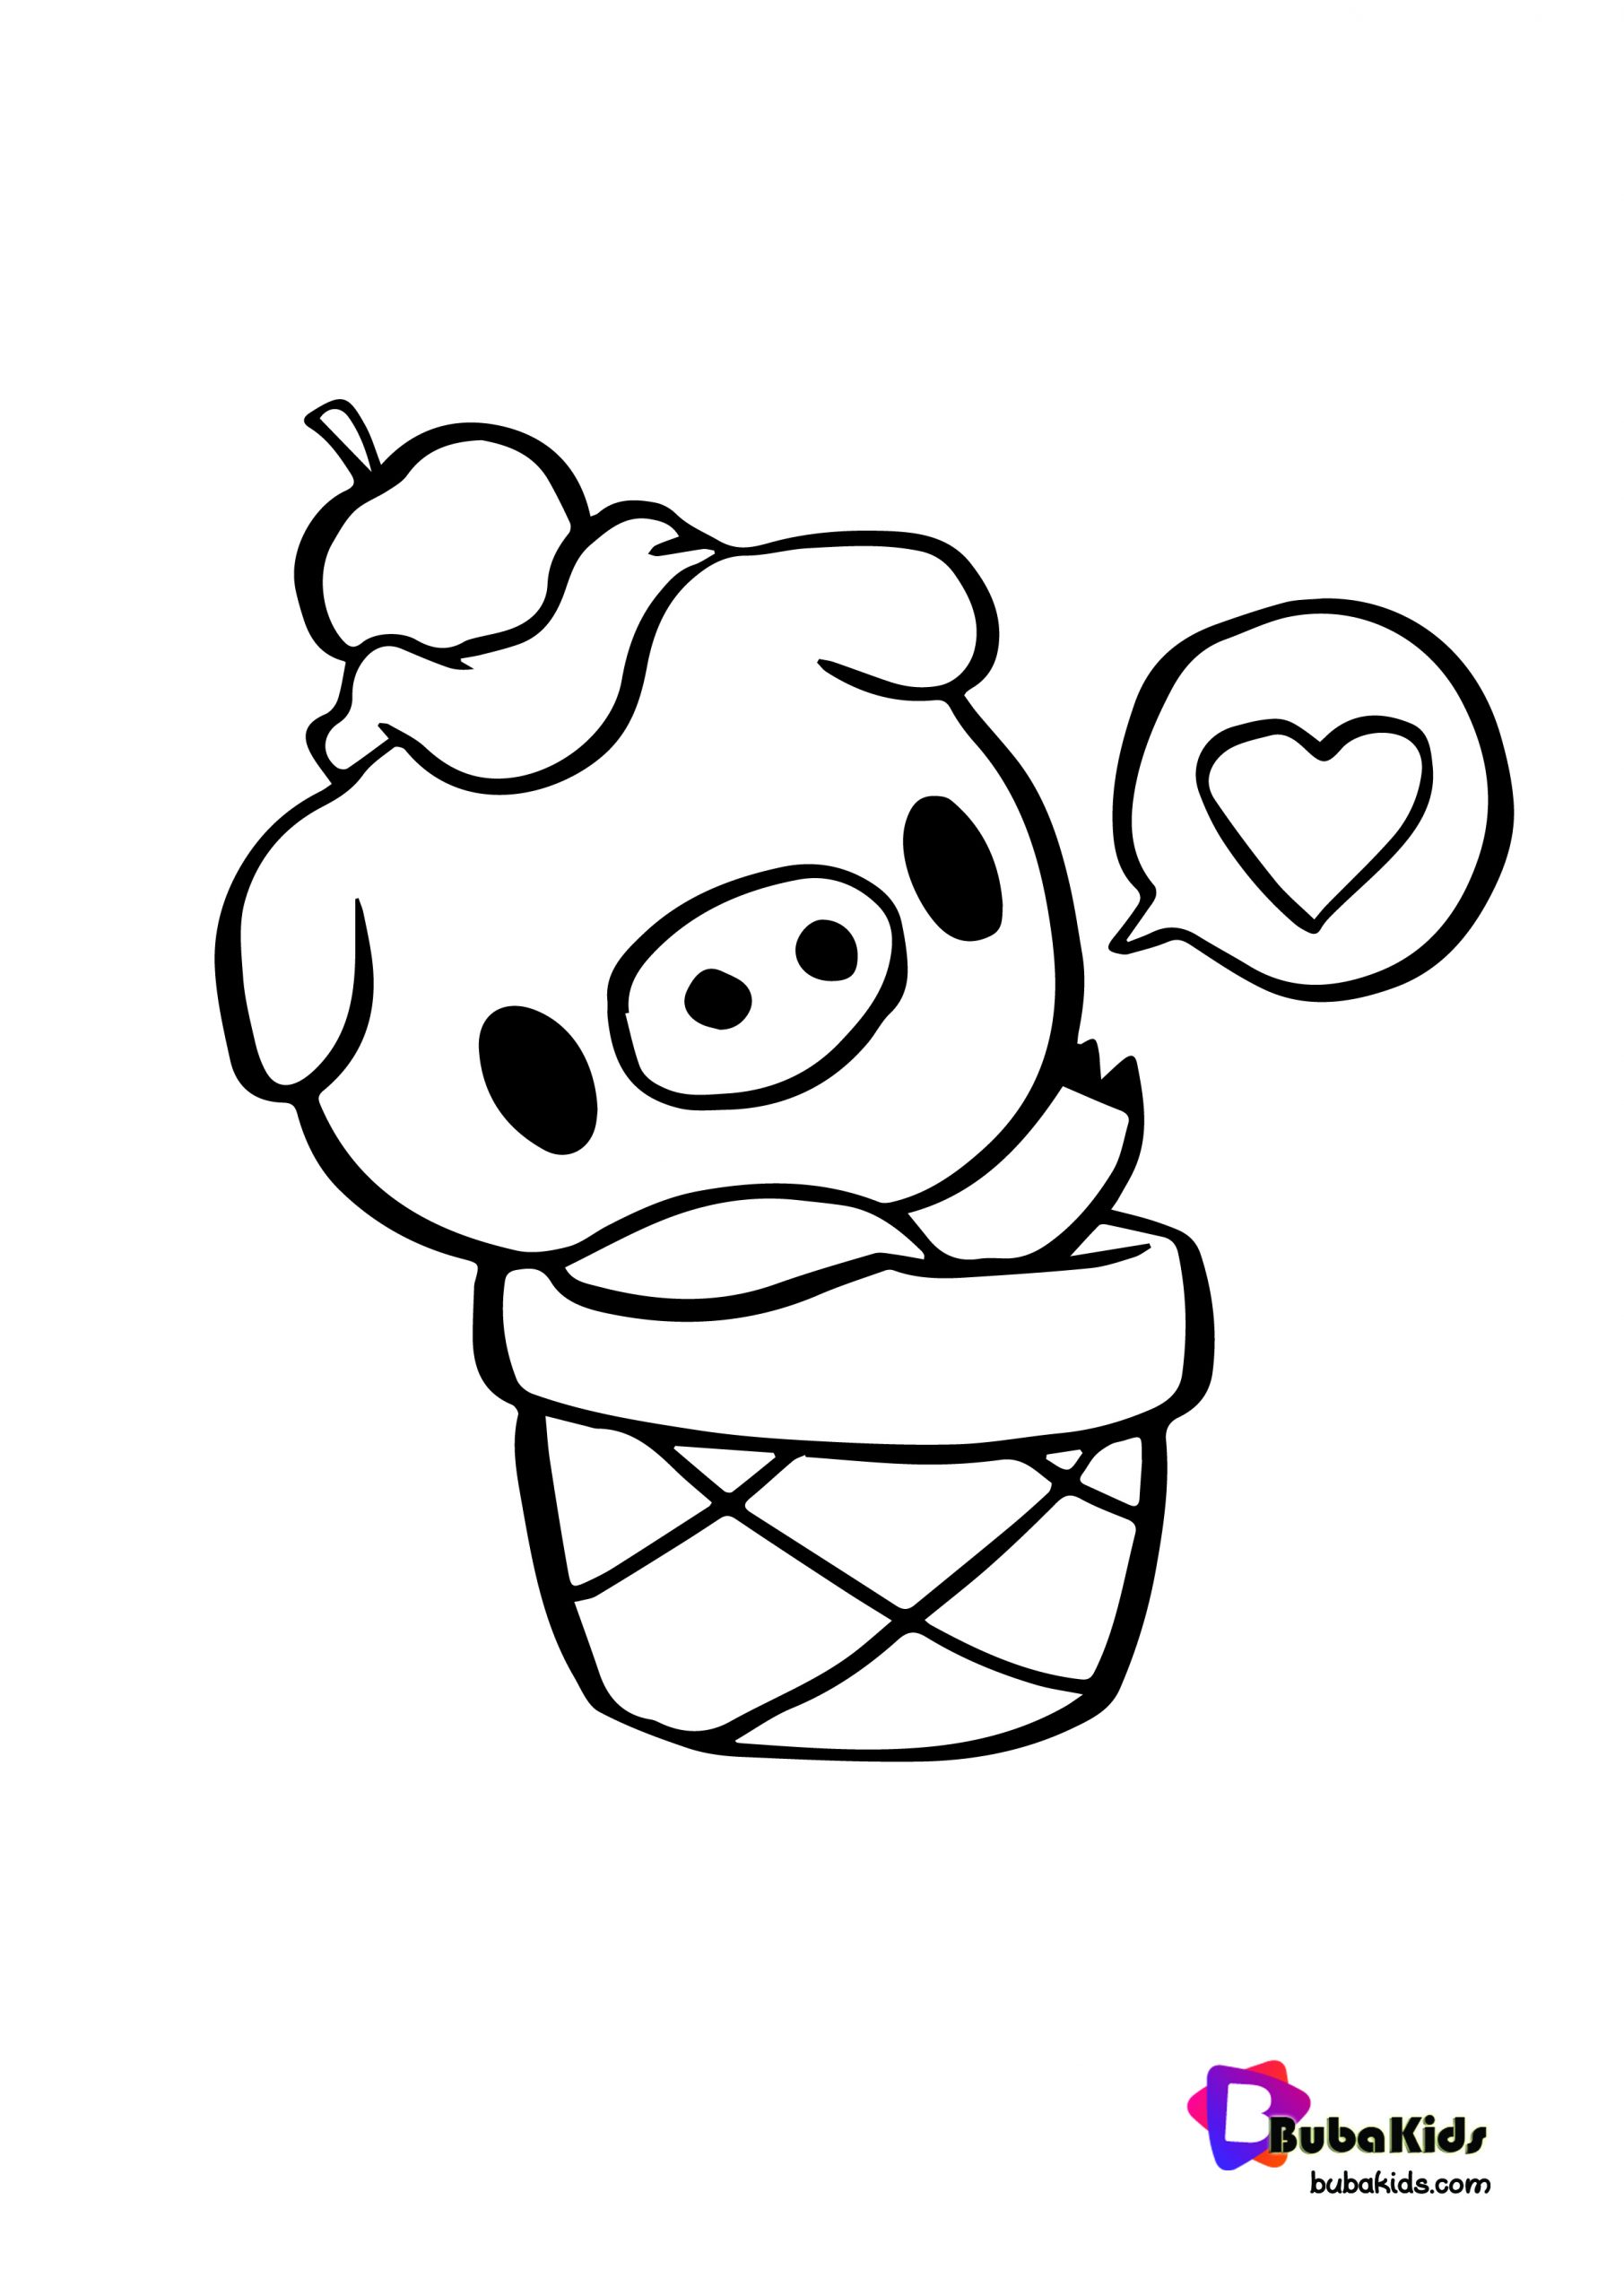 Cute Pigo The Pig Coloring Page Wallpaper